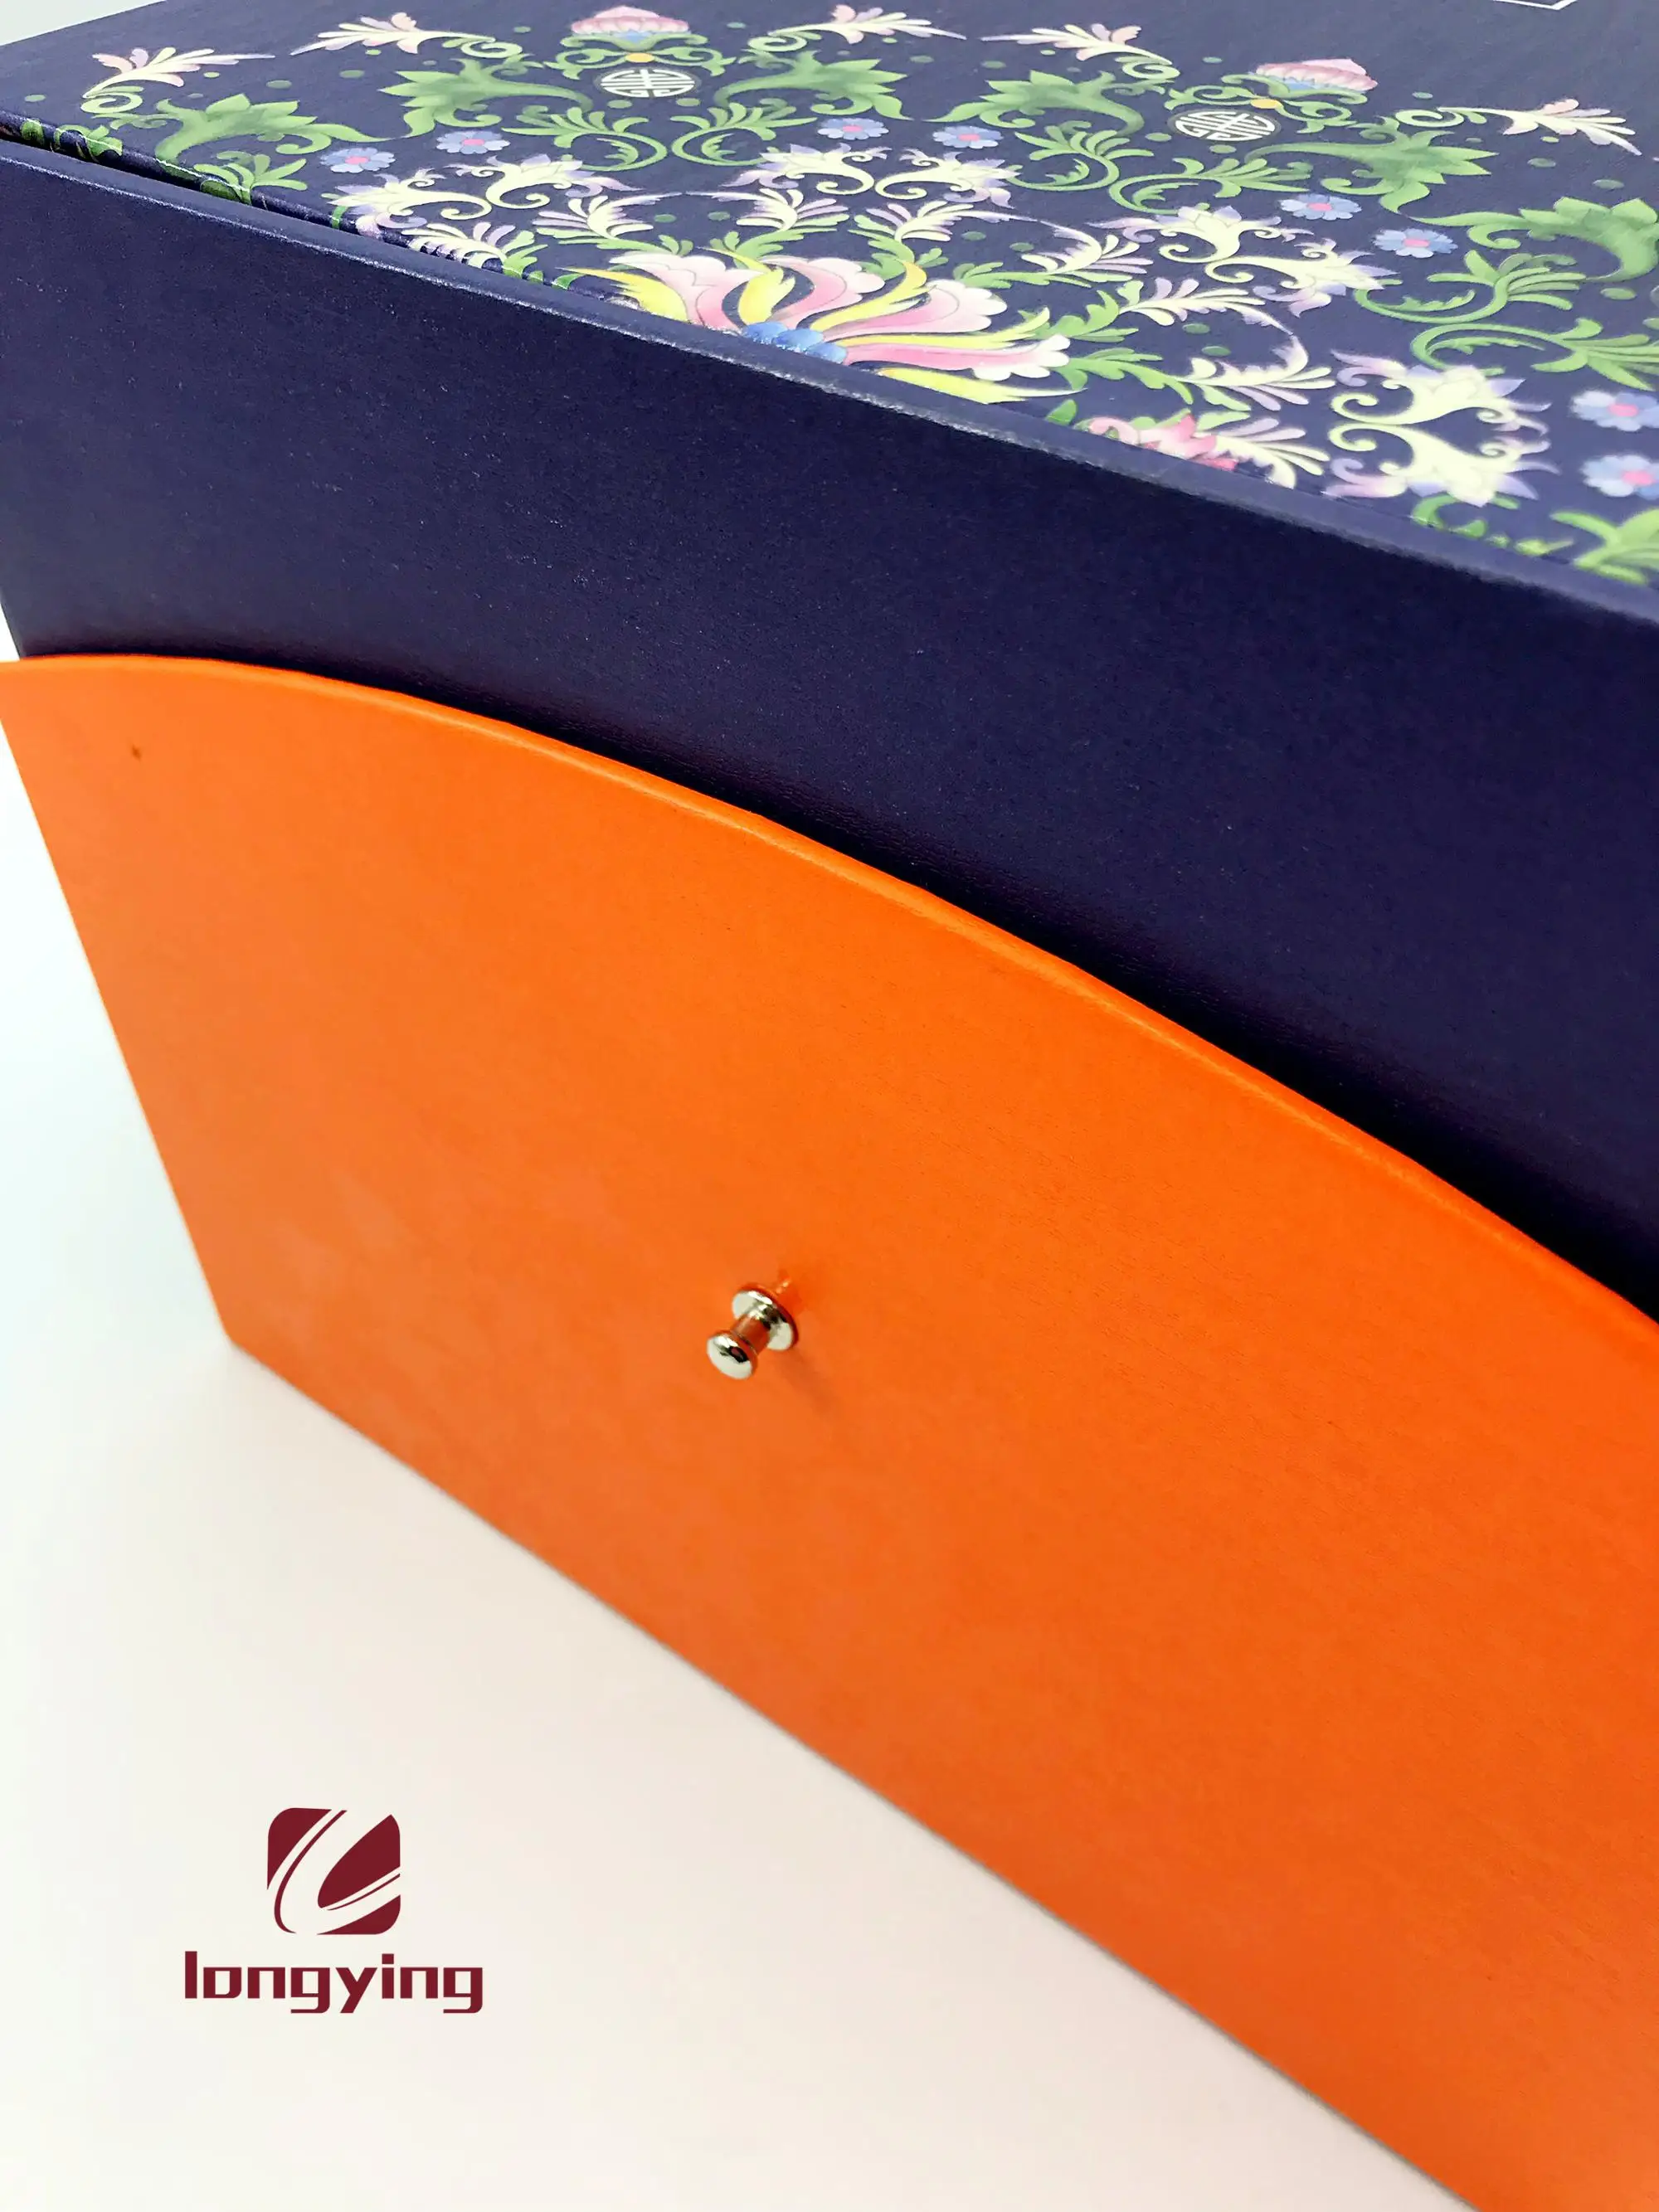 New Design Luxury Blue 3 Layer Box Drawer Cardboard Box With Flip Box